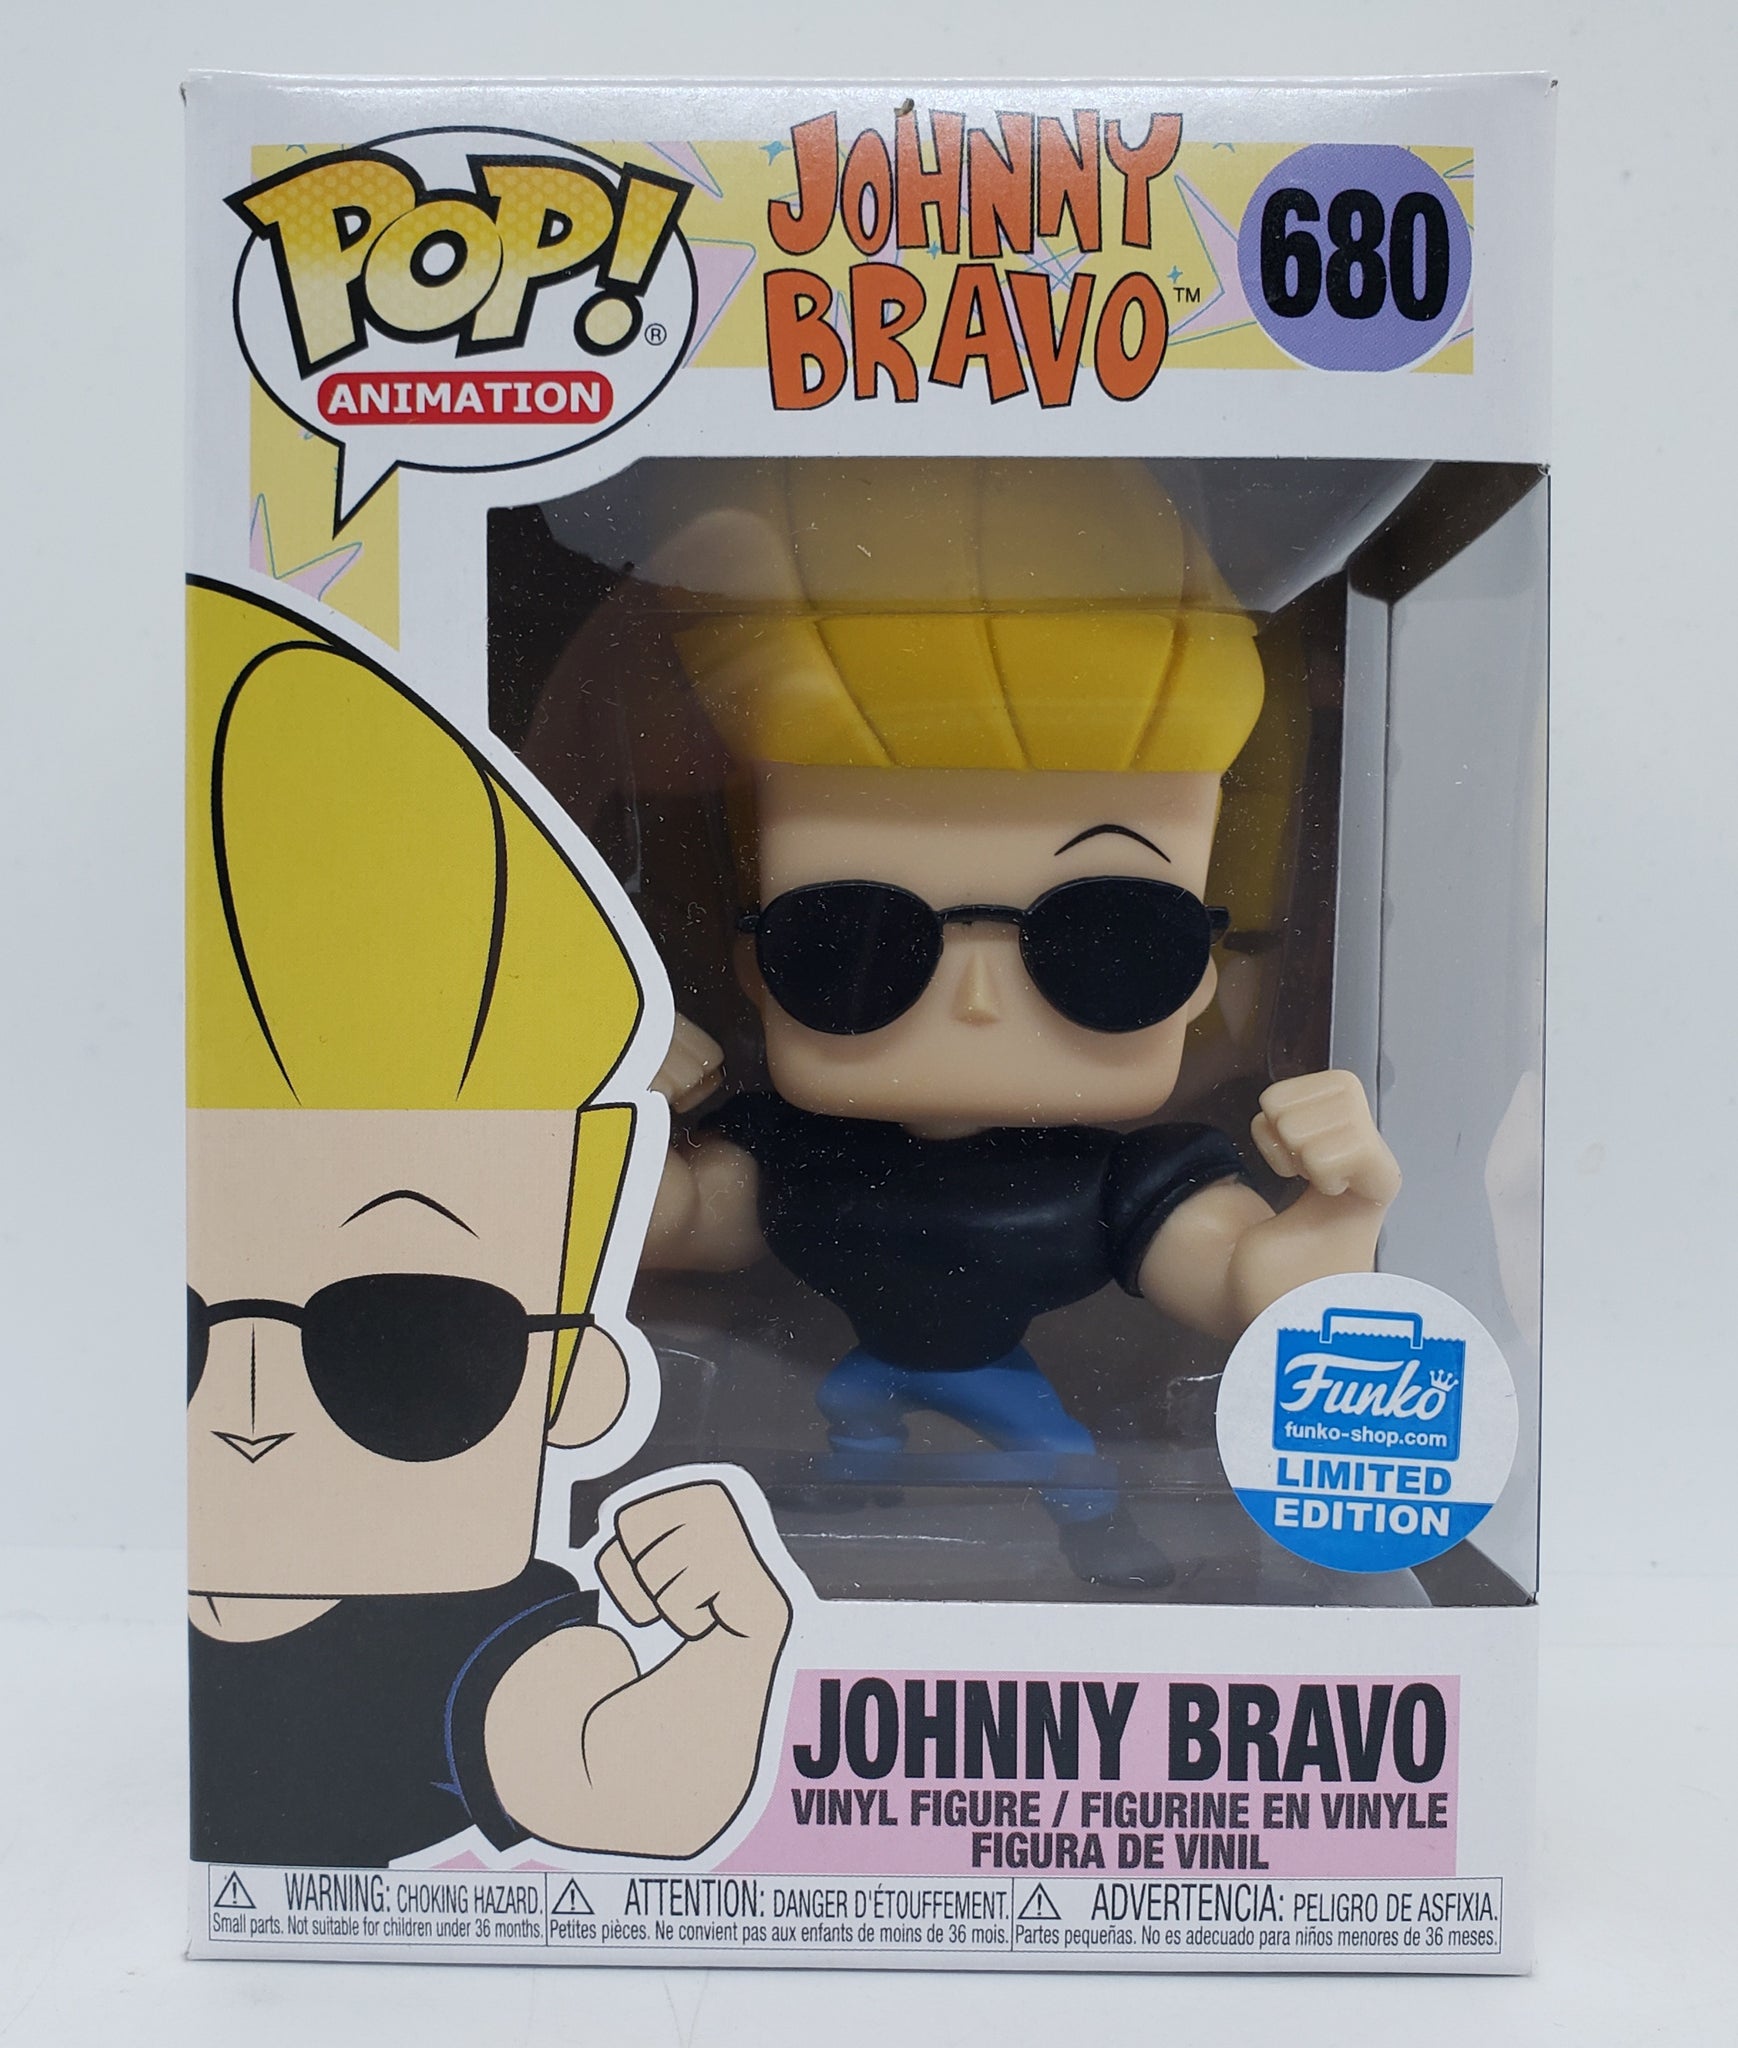 Johnny Bravo Cartoon Network Plastic Collectible